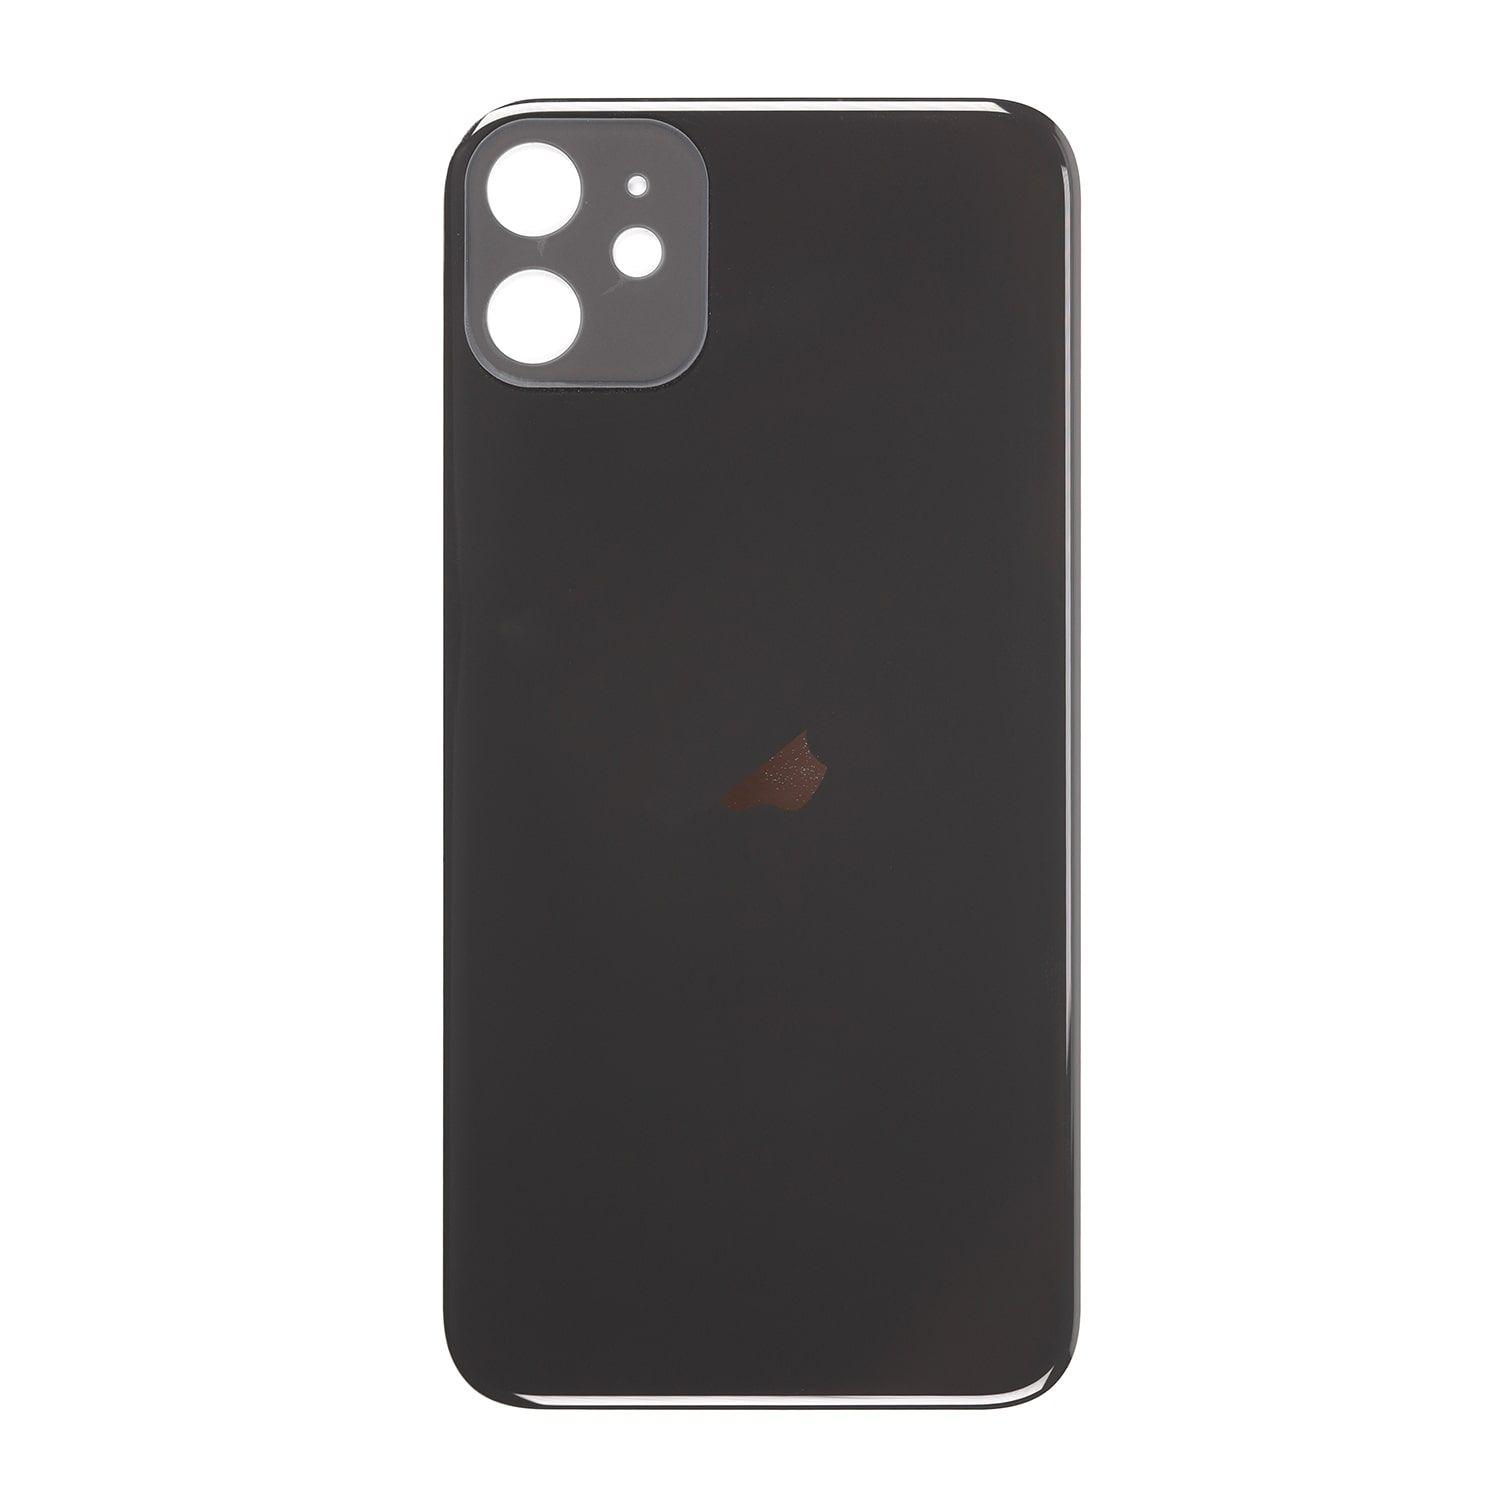 Kryt baterie iPhone 11 Pro Max černý  - bez sklíčka kamery